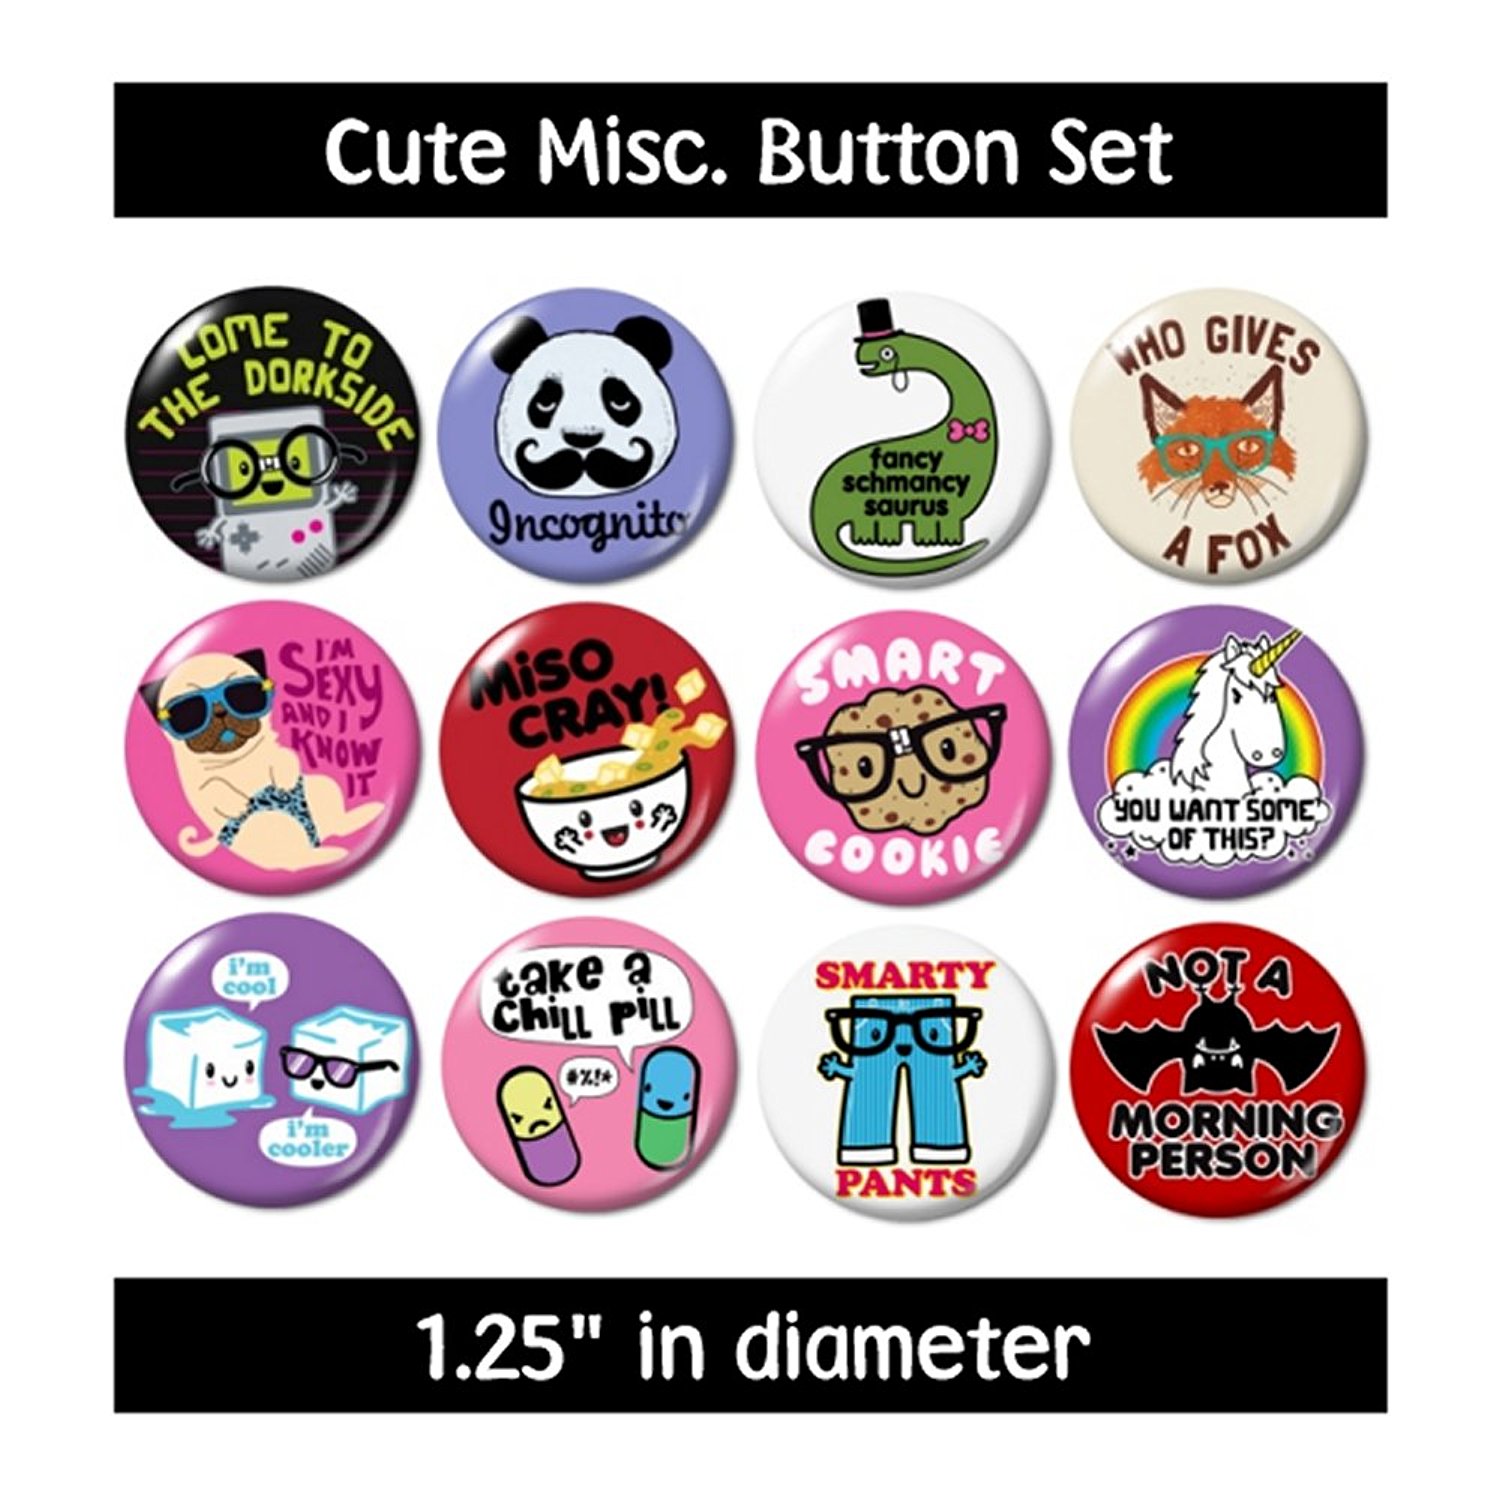 Amazon.com: CUTE MISC. BUTTONS pins badges dork smarty pants new ...